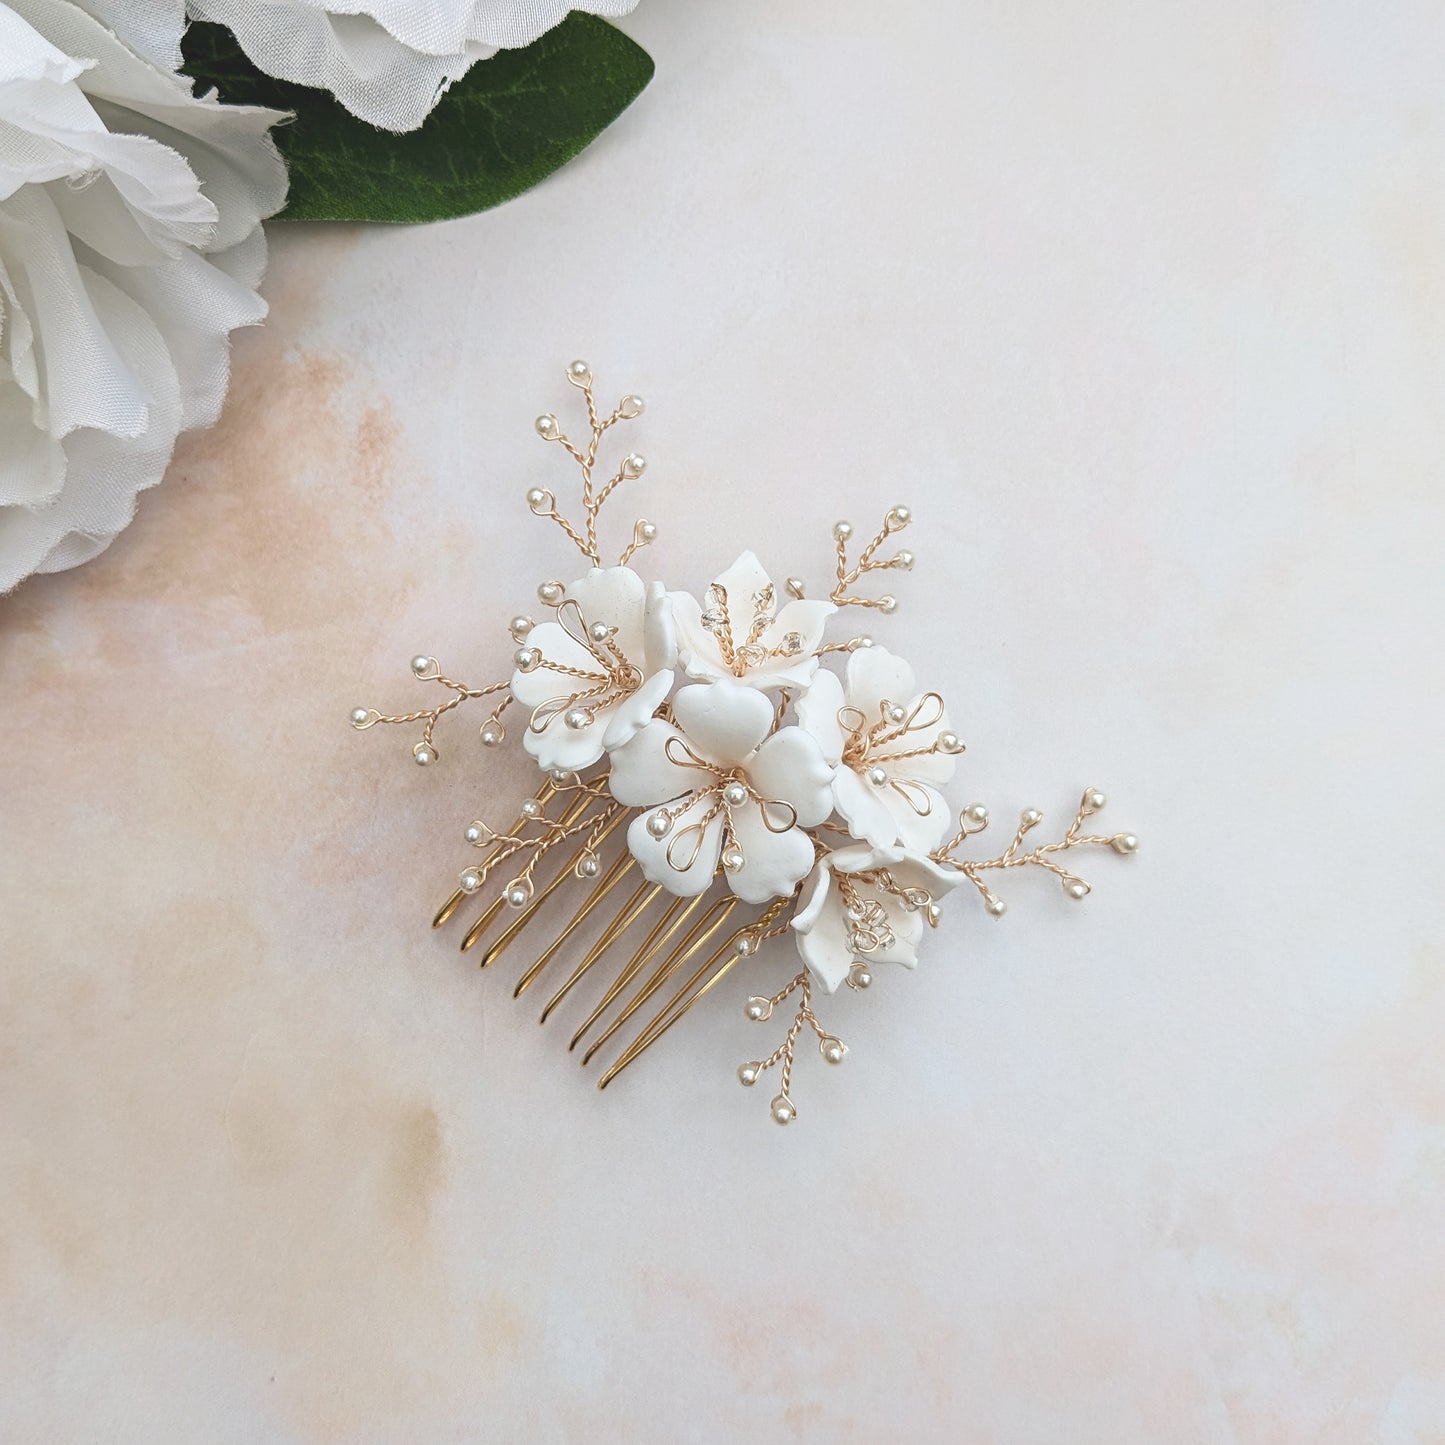 Modern floral hair comb for brides - Susie Warner